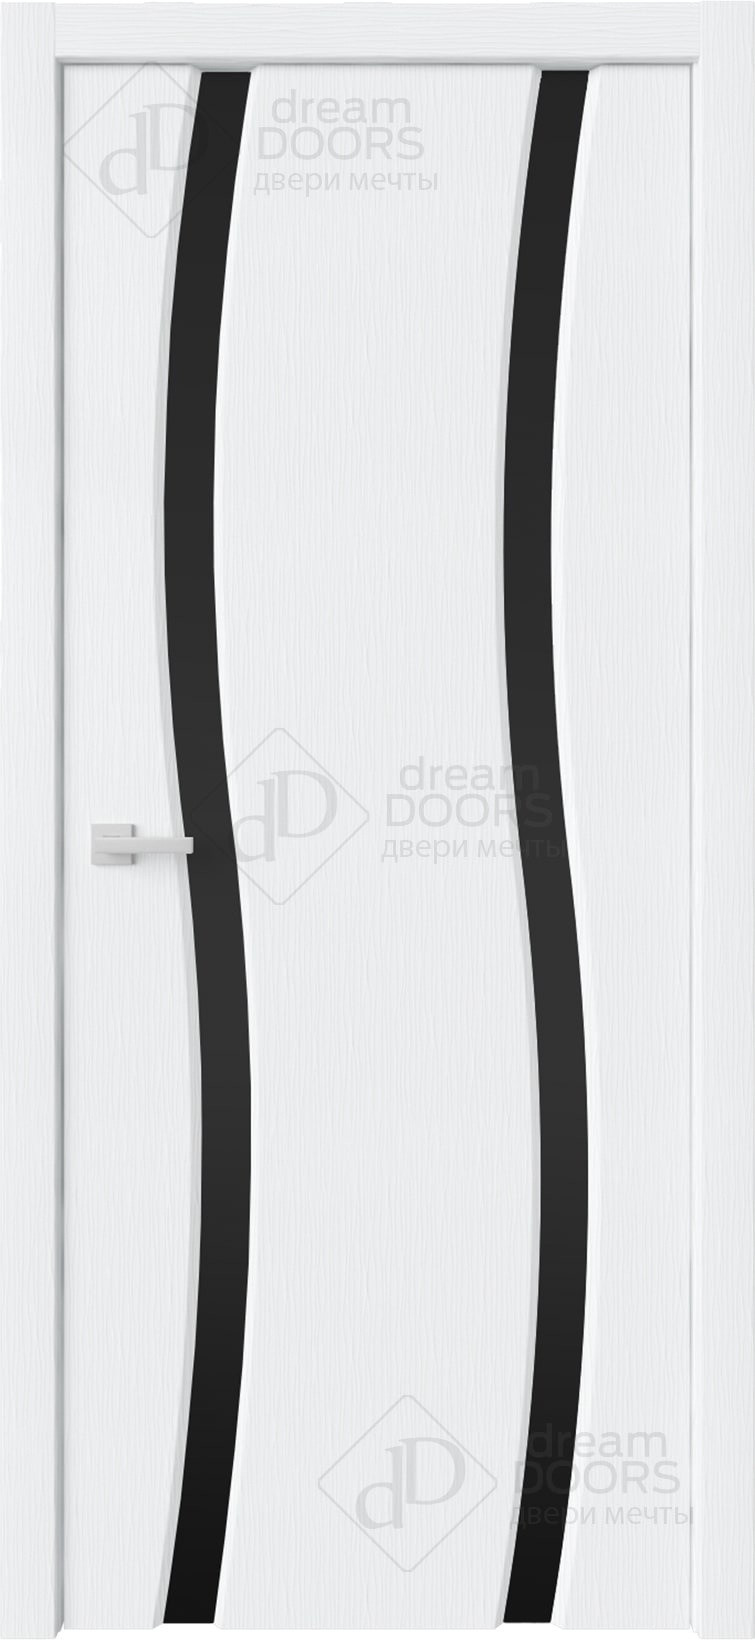 Dream Doors Межкомнатная дверь Сириус 2 Волна узкое ДО, арт. 20084 - фото №2